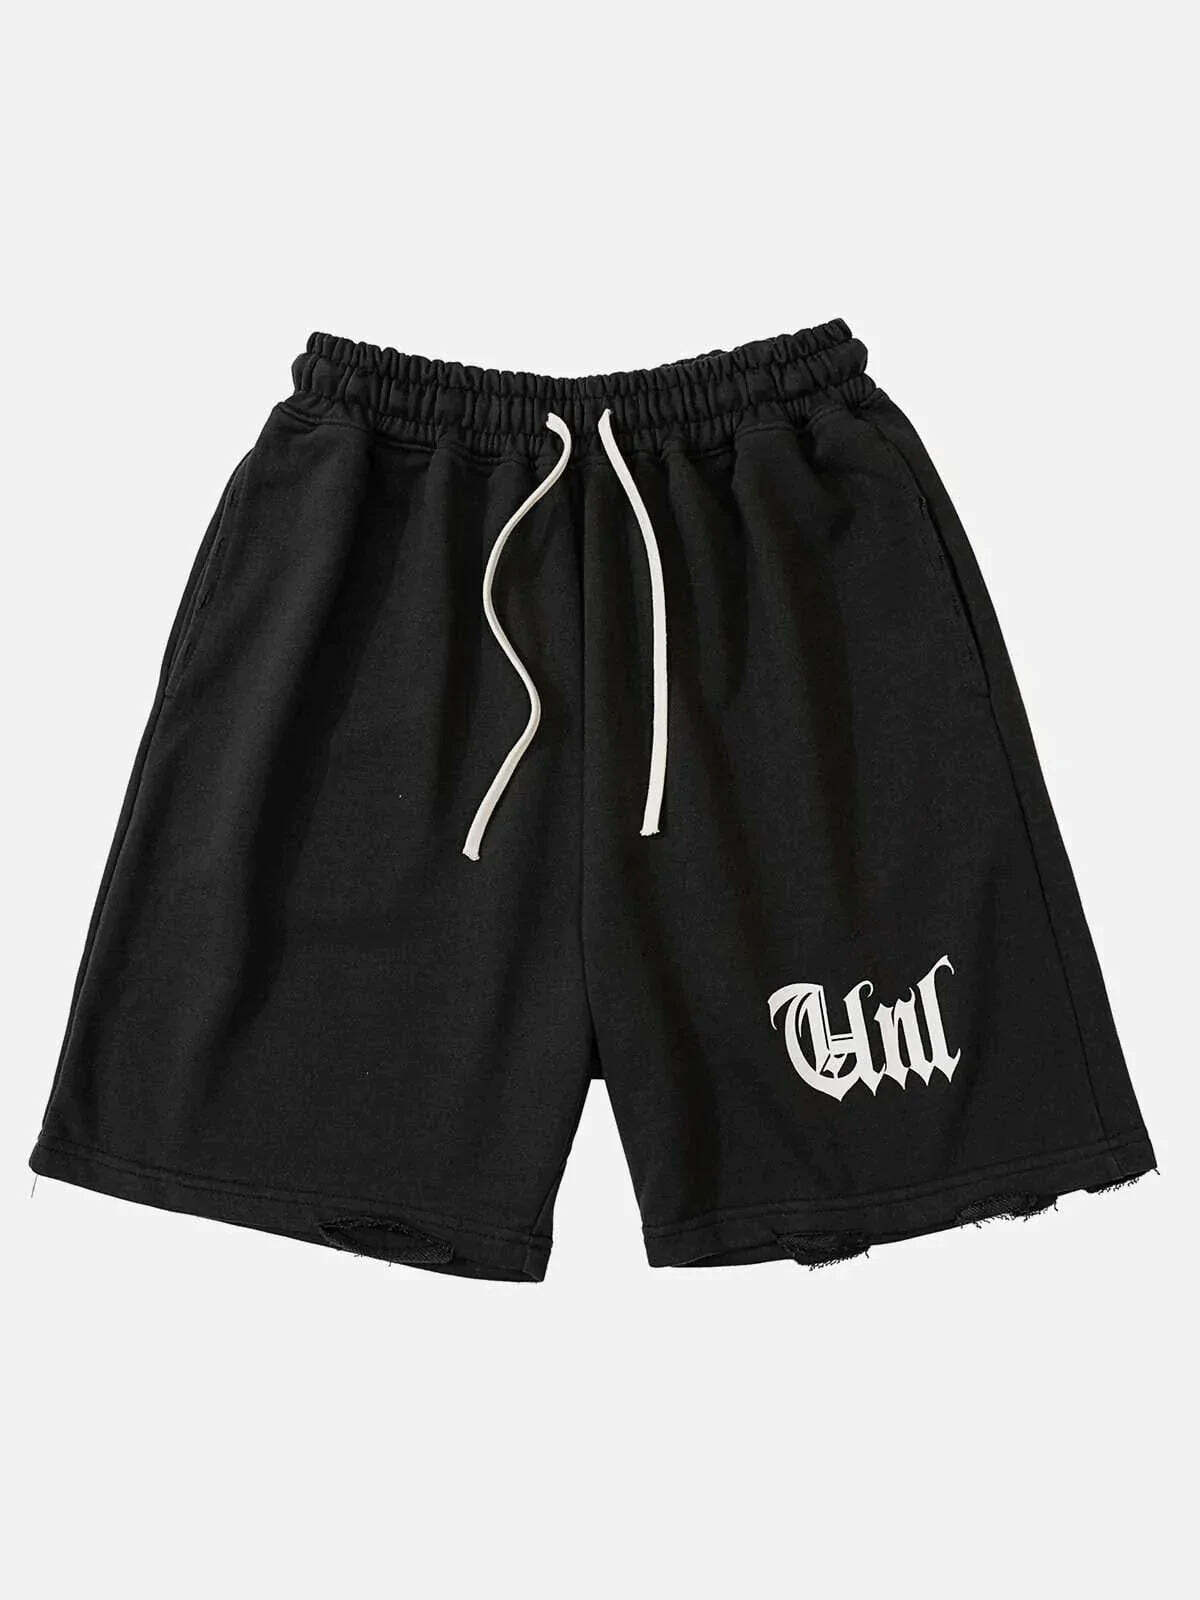 ripped drawstring shorts edgy streetwear essential 6659